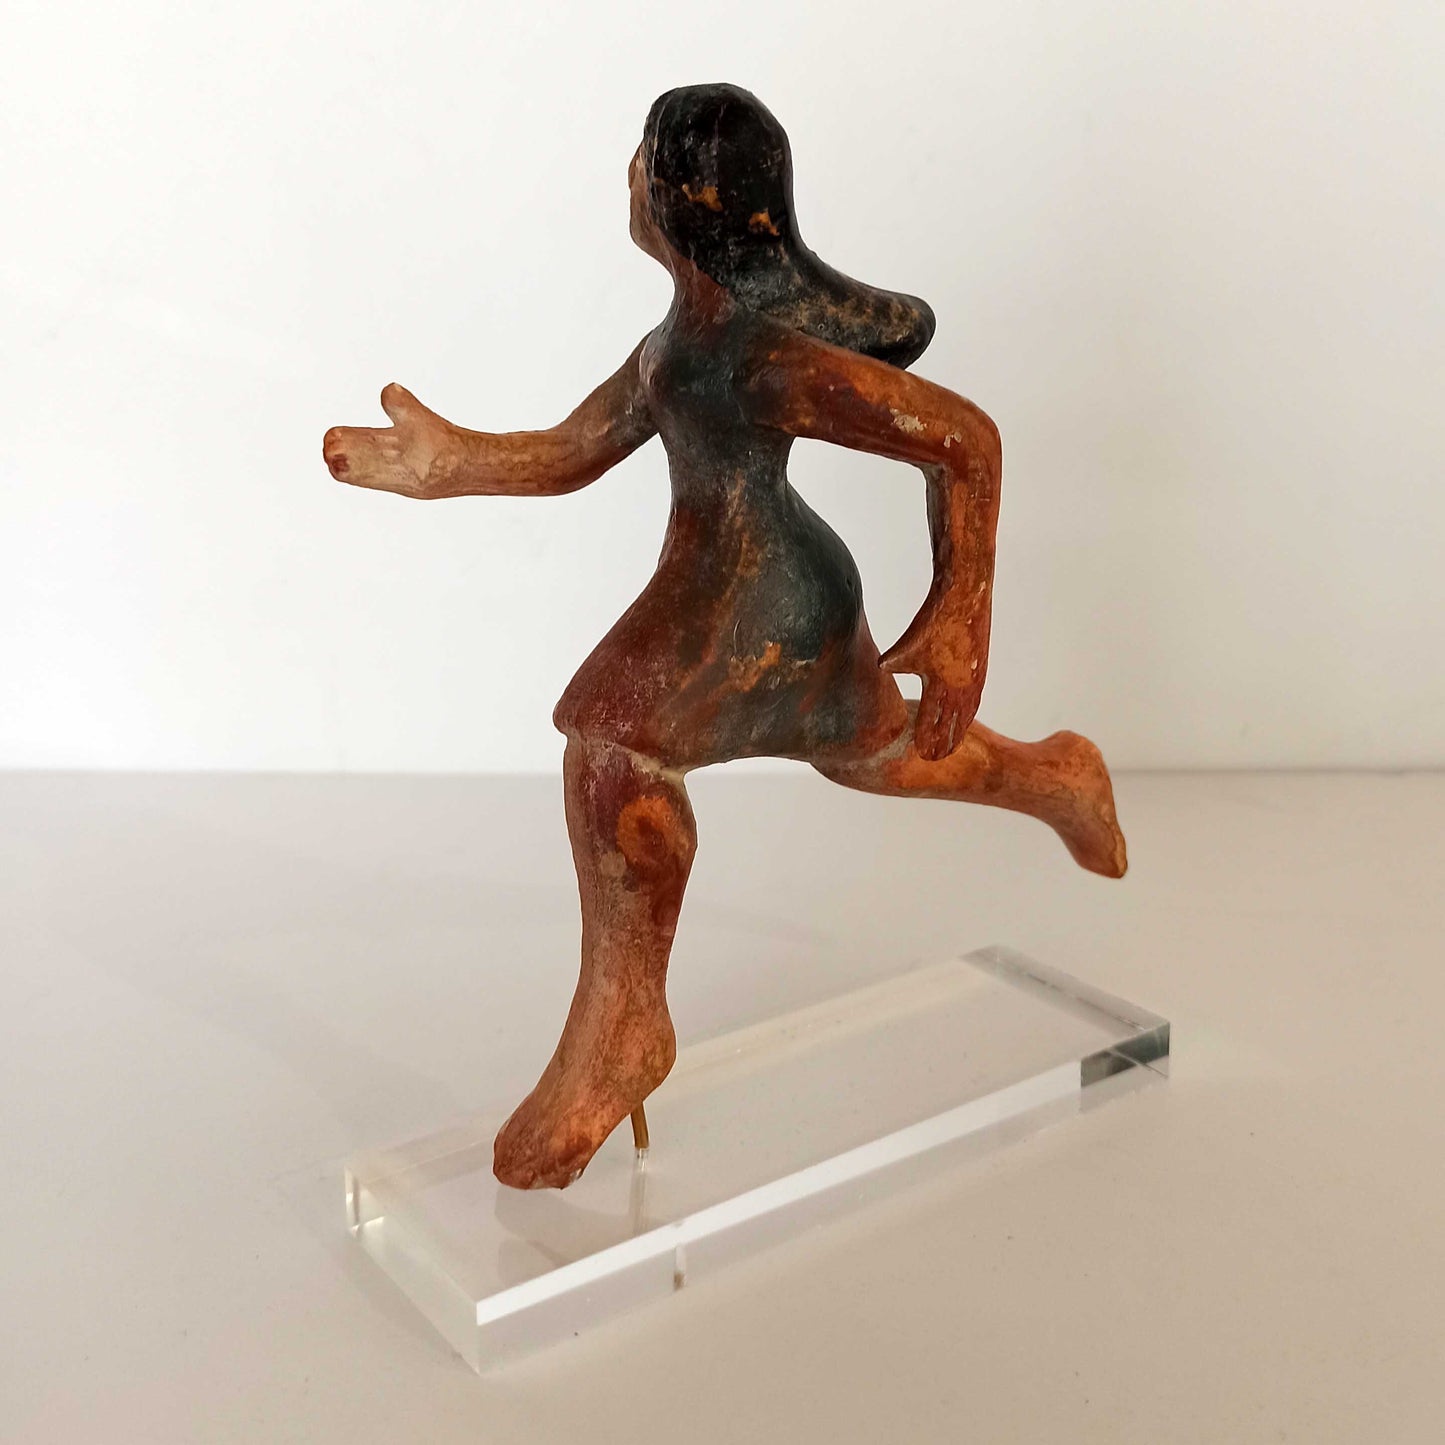 Woman Runner - Athlete - Foot Race   - Ancient Greek Heraean Games  - Plexiglass Base - Ceramic Artifact